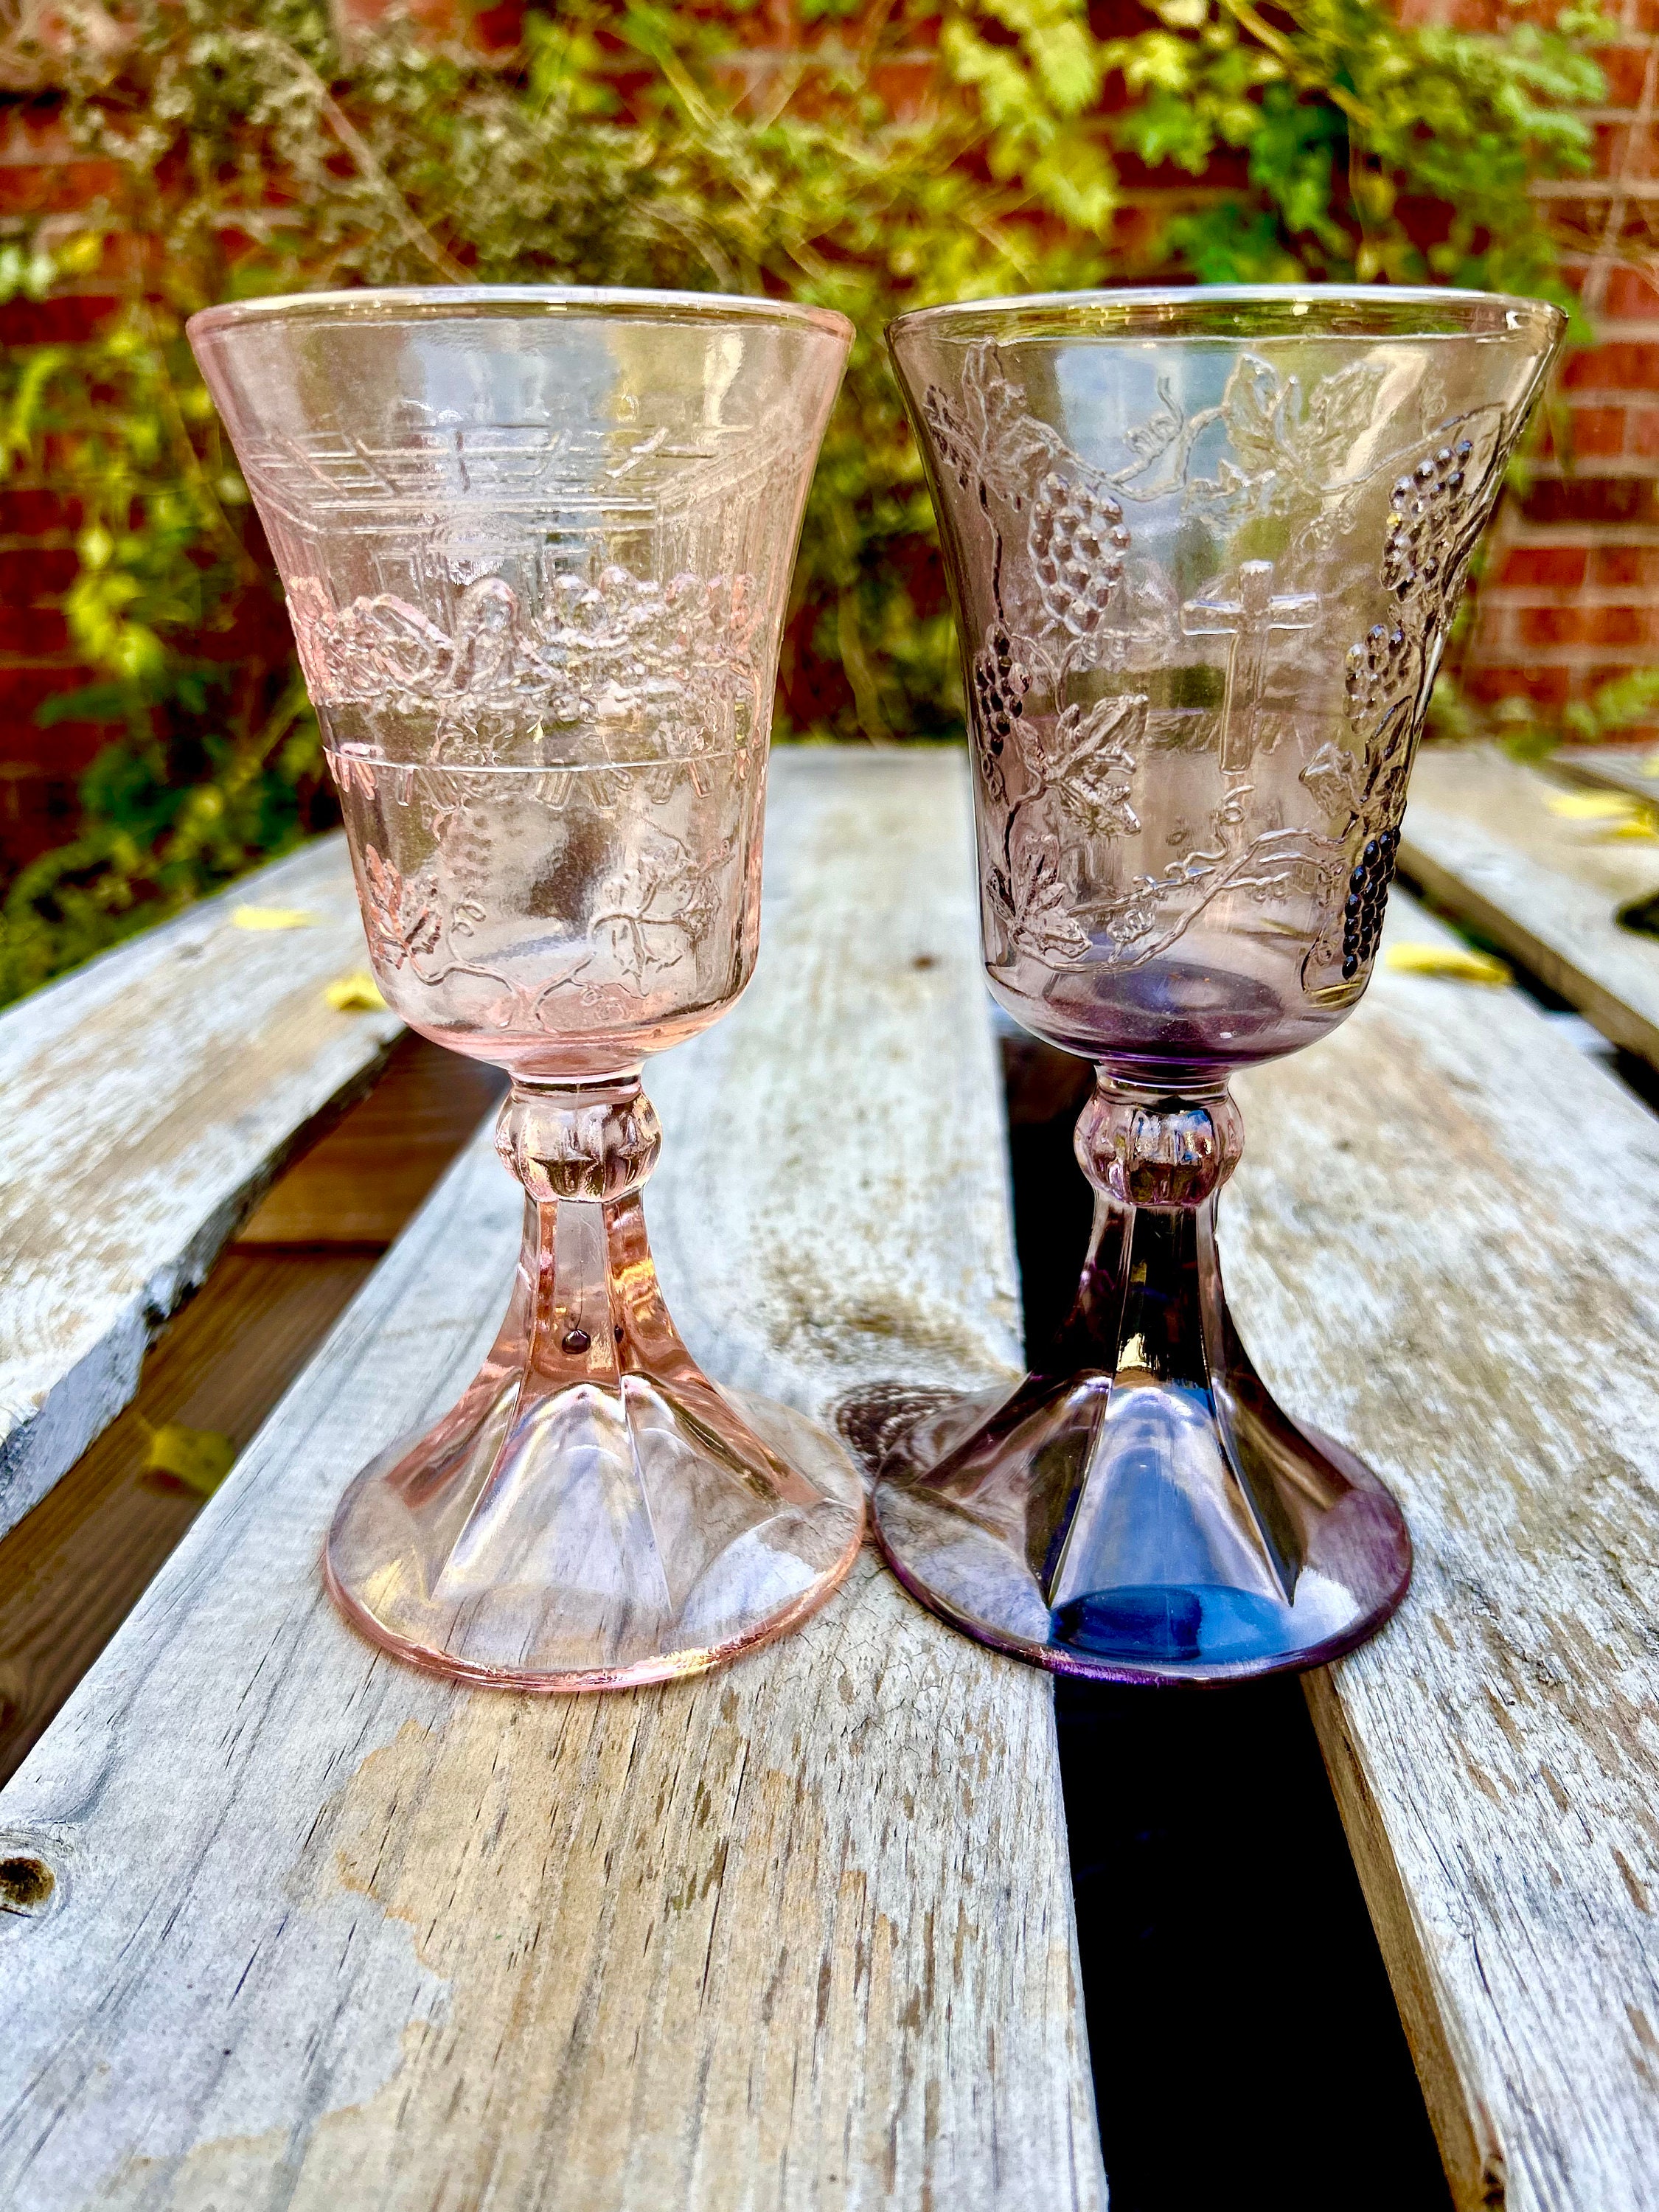 Brass Plated Smokey Gradient Design Goblet Style Wine Glasses, Set